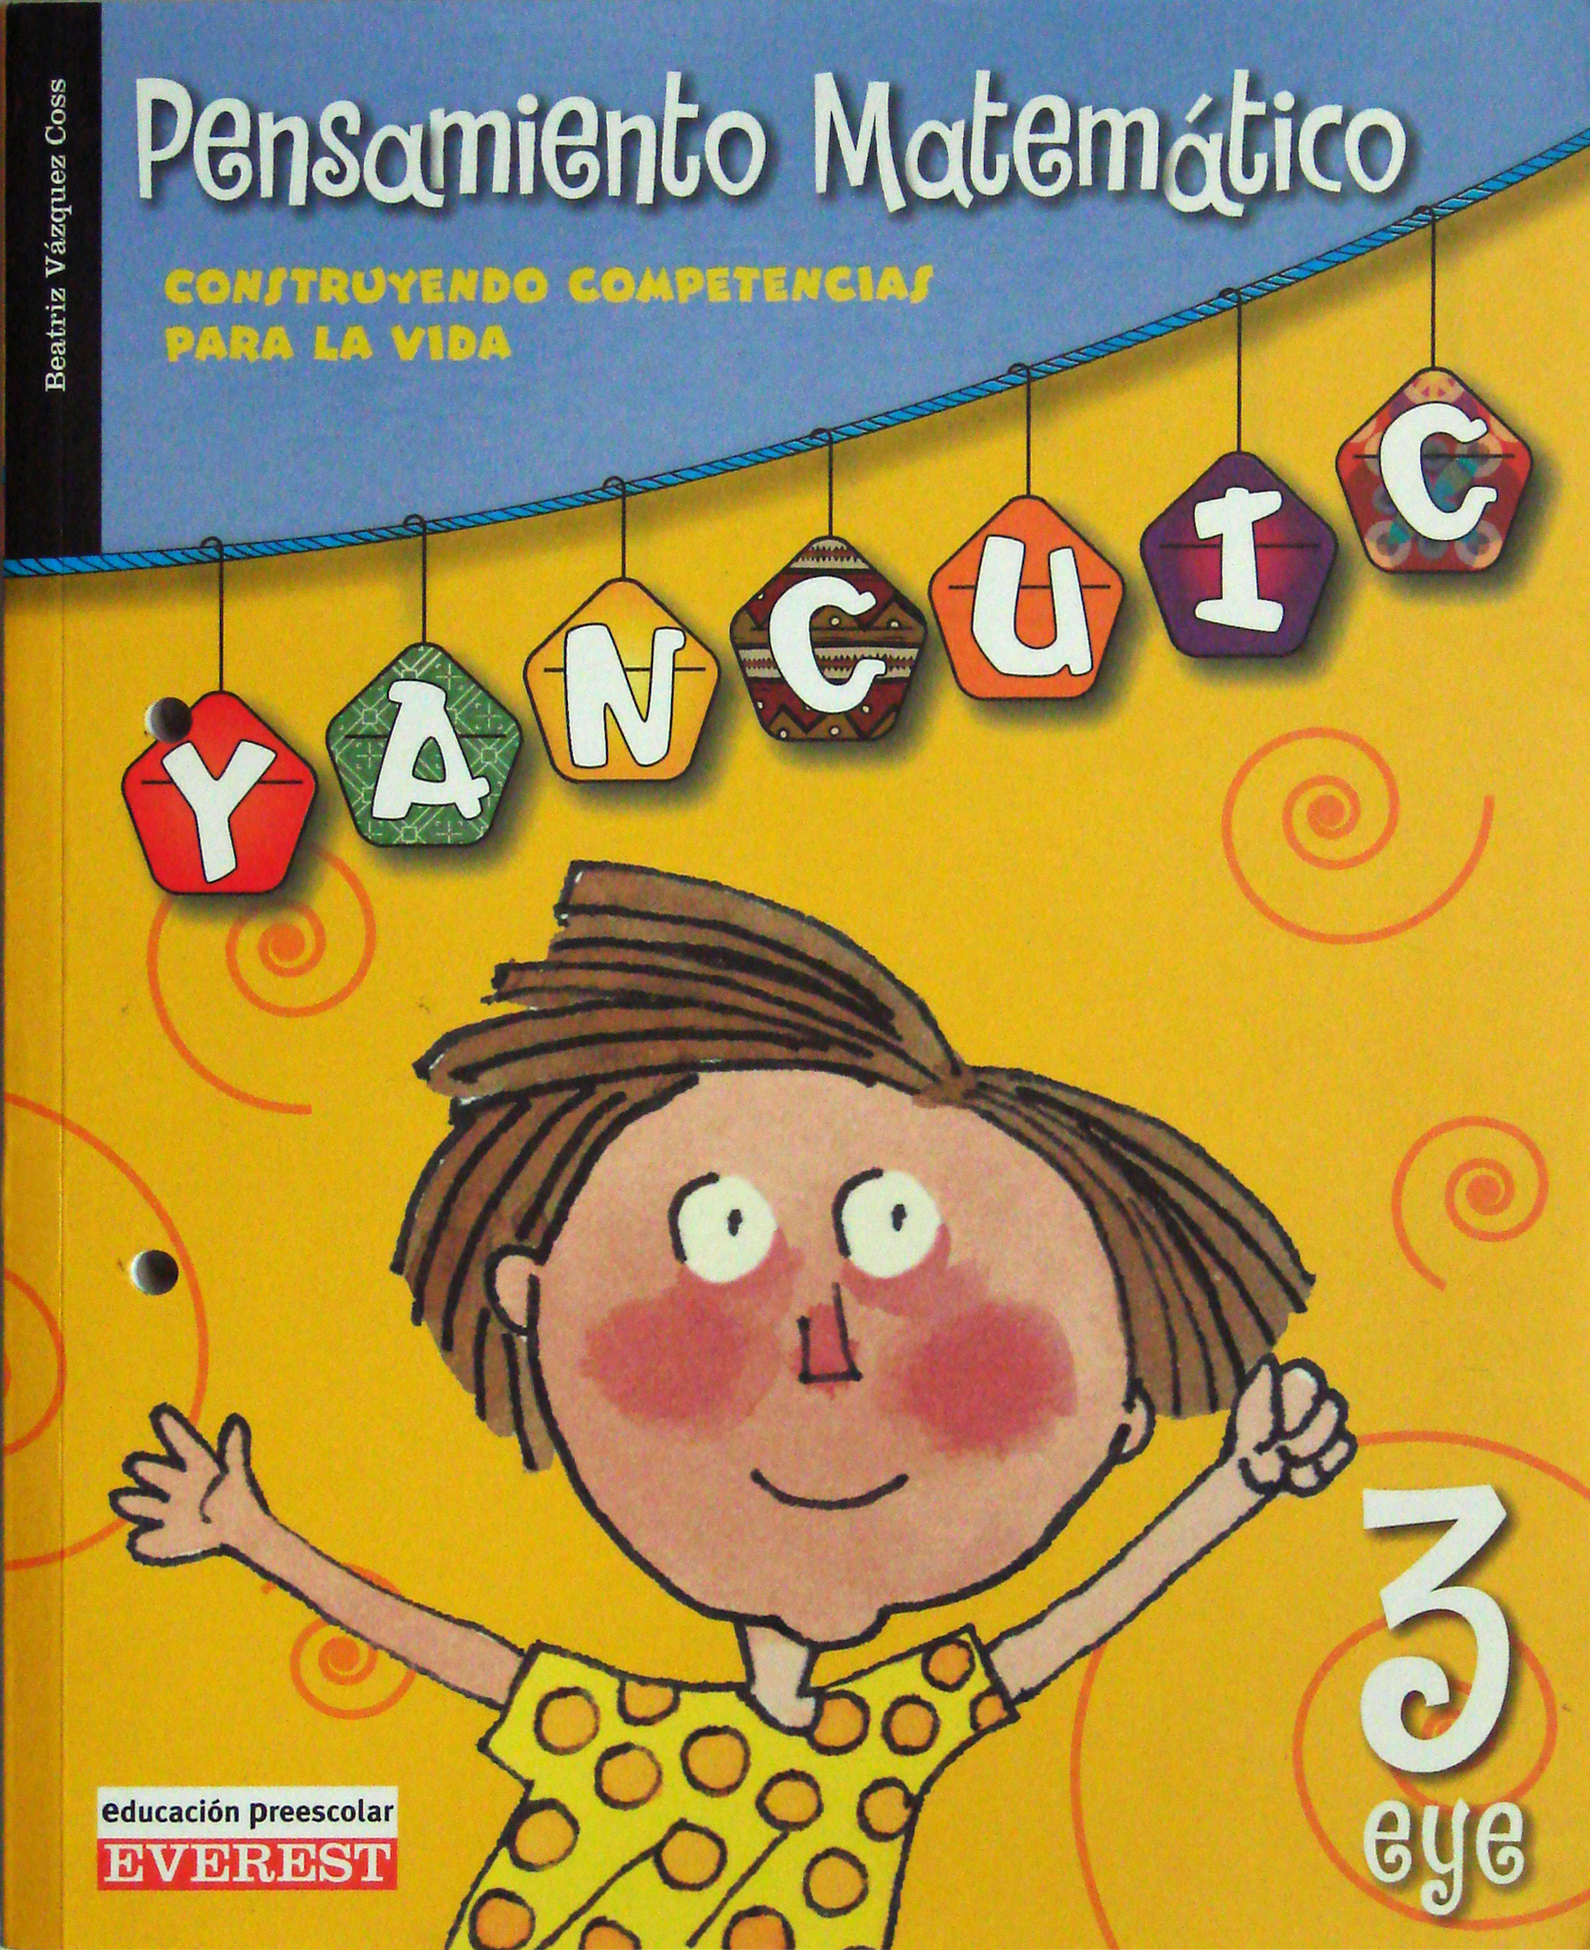 Proyecto Yancuic